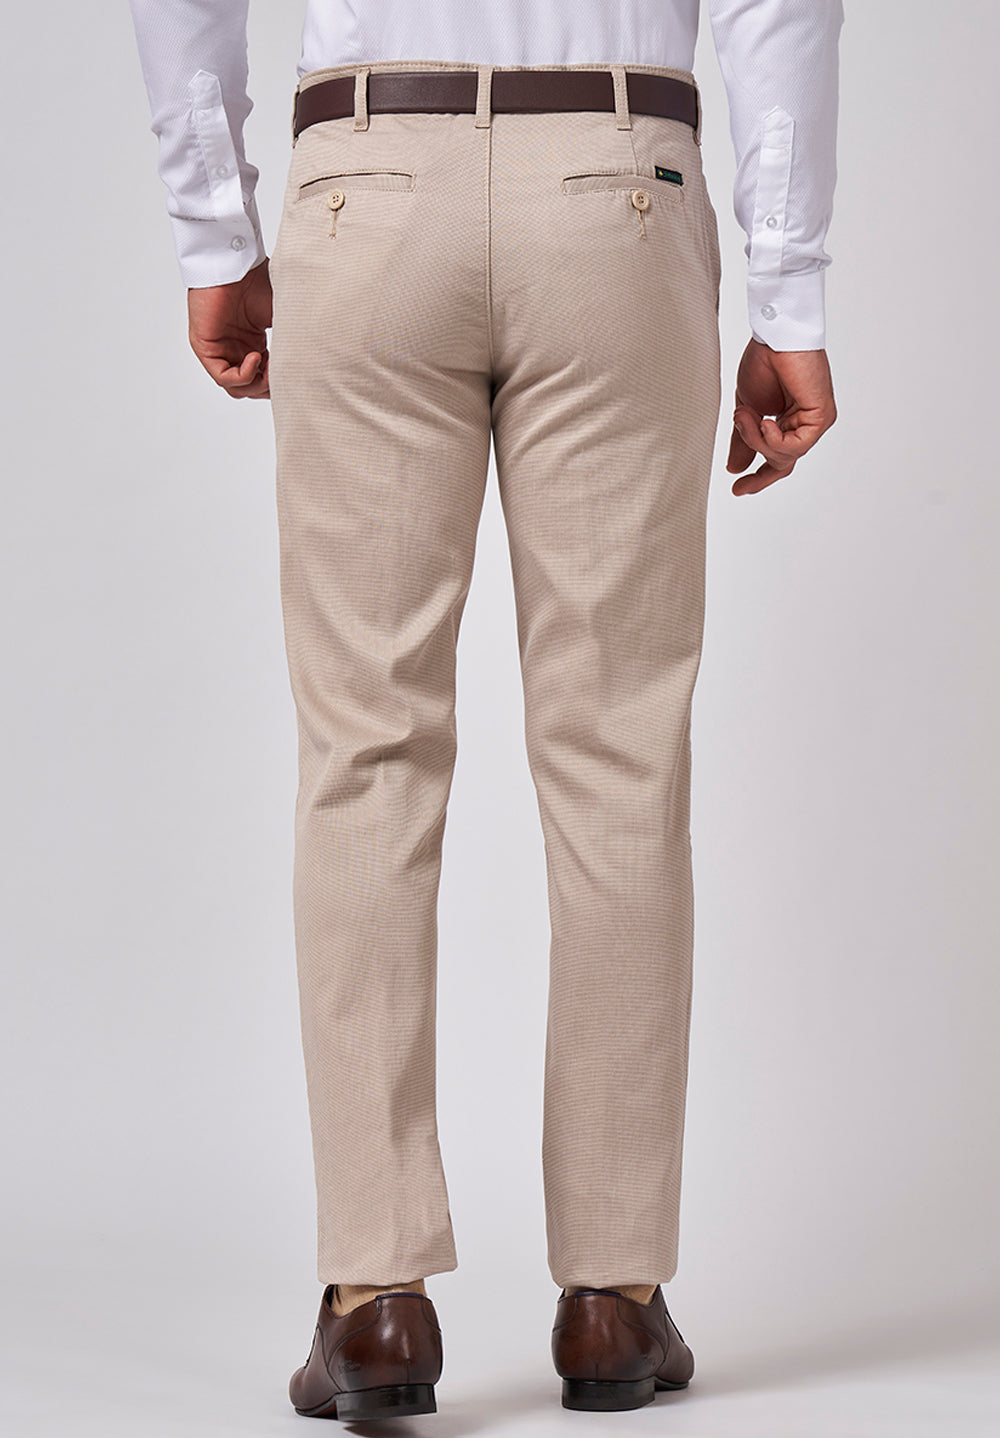 Narrow Fit Cotton Trouser - NR - 1